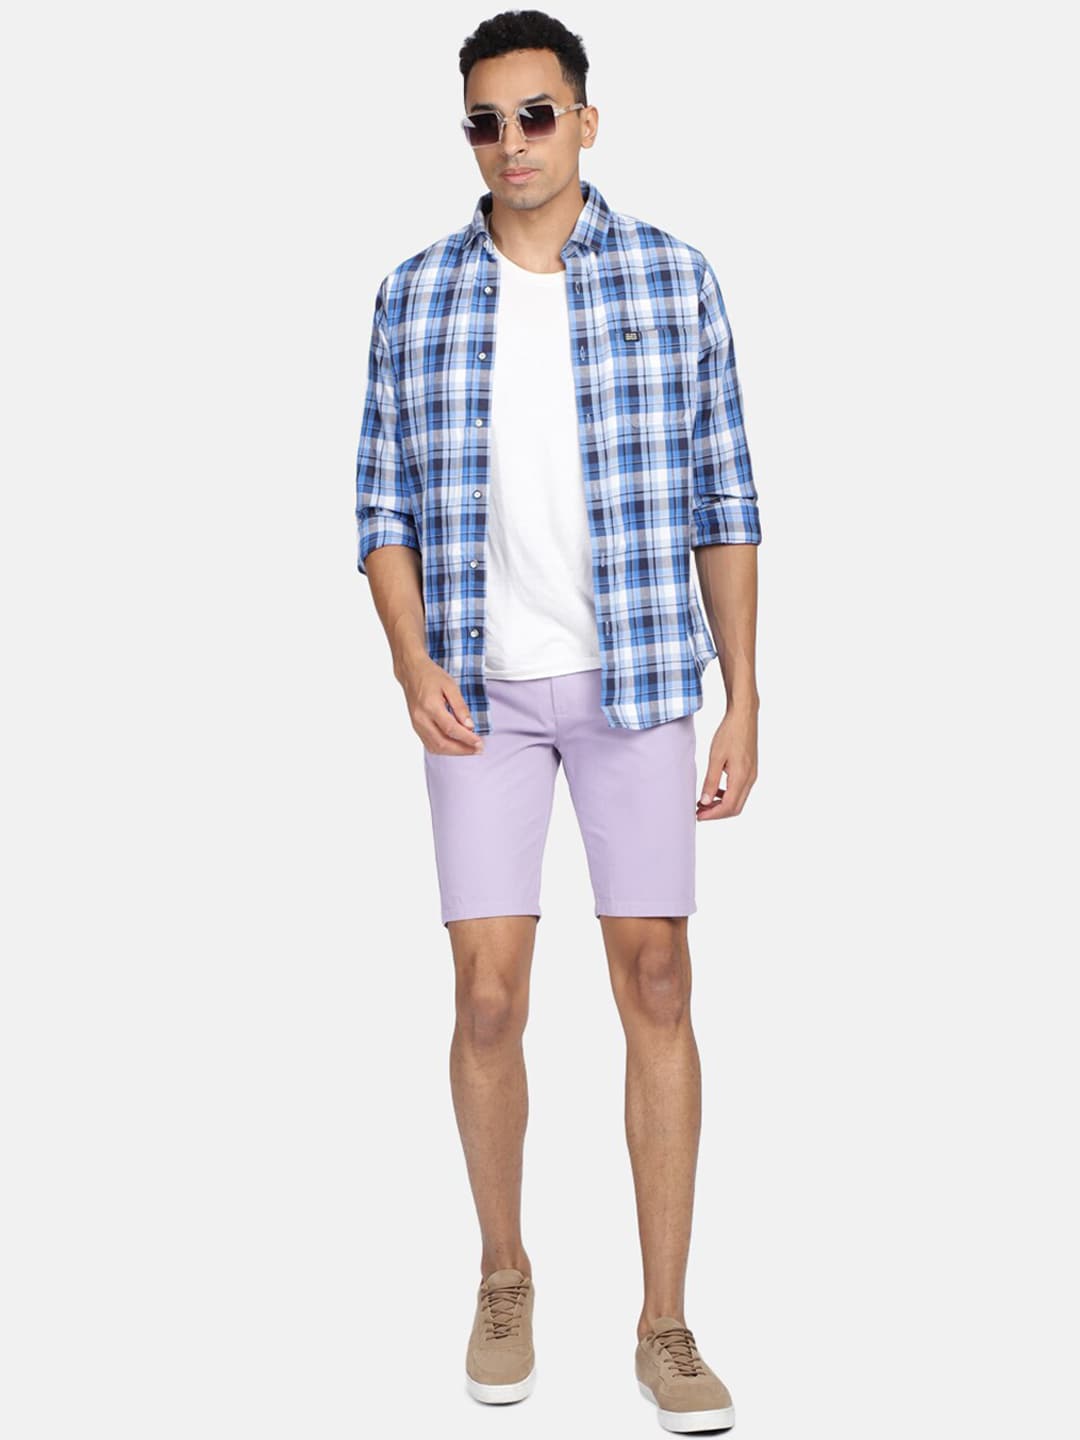 Shop Men Solid Casual Shorts Online.